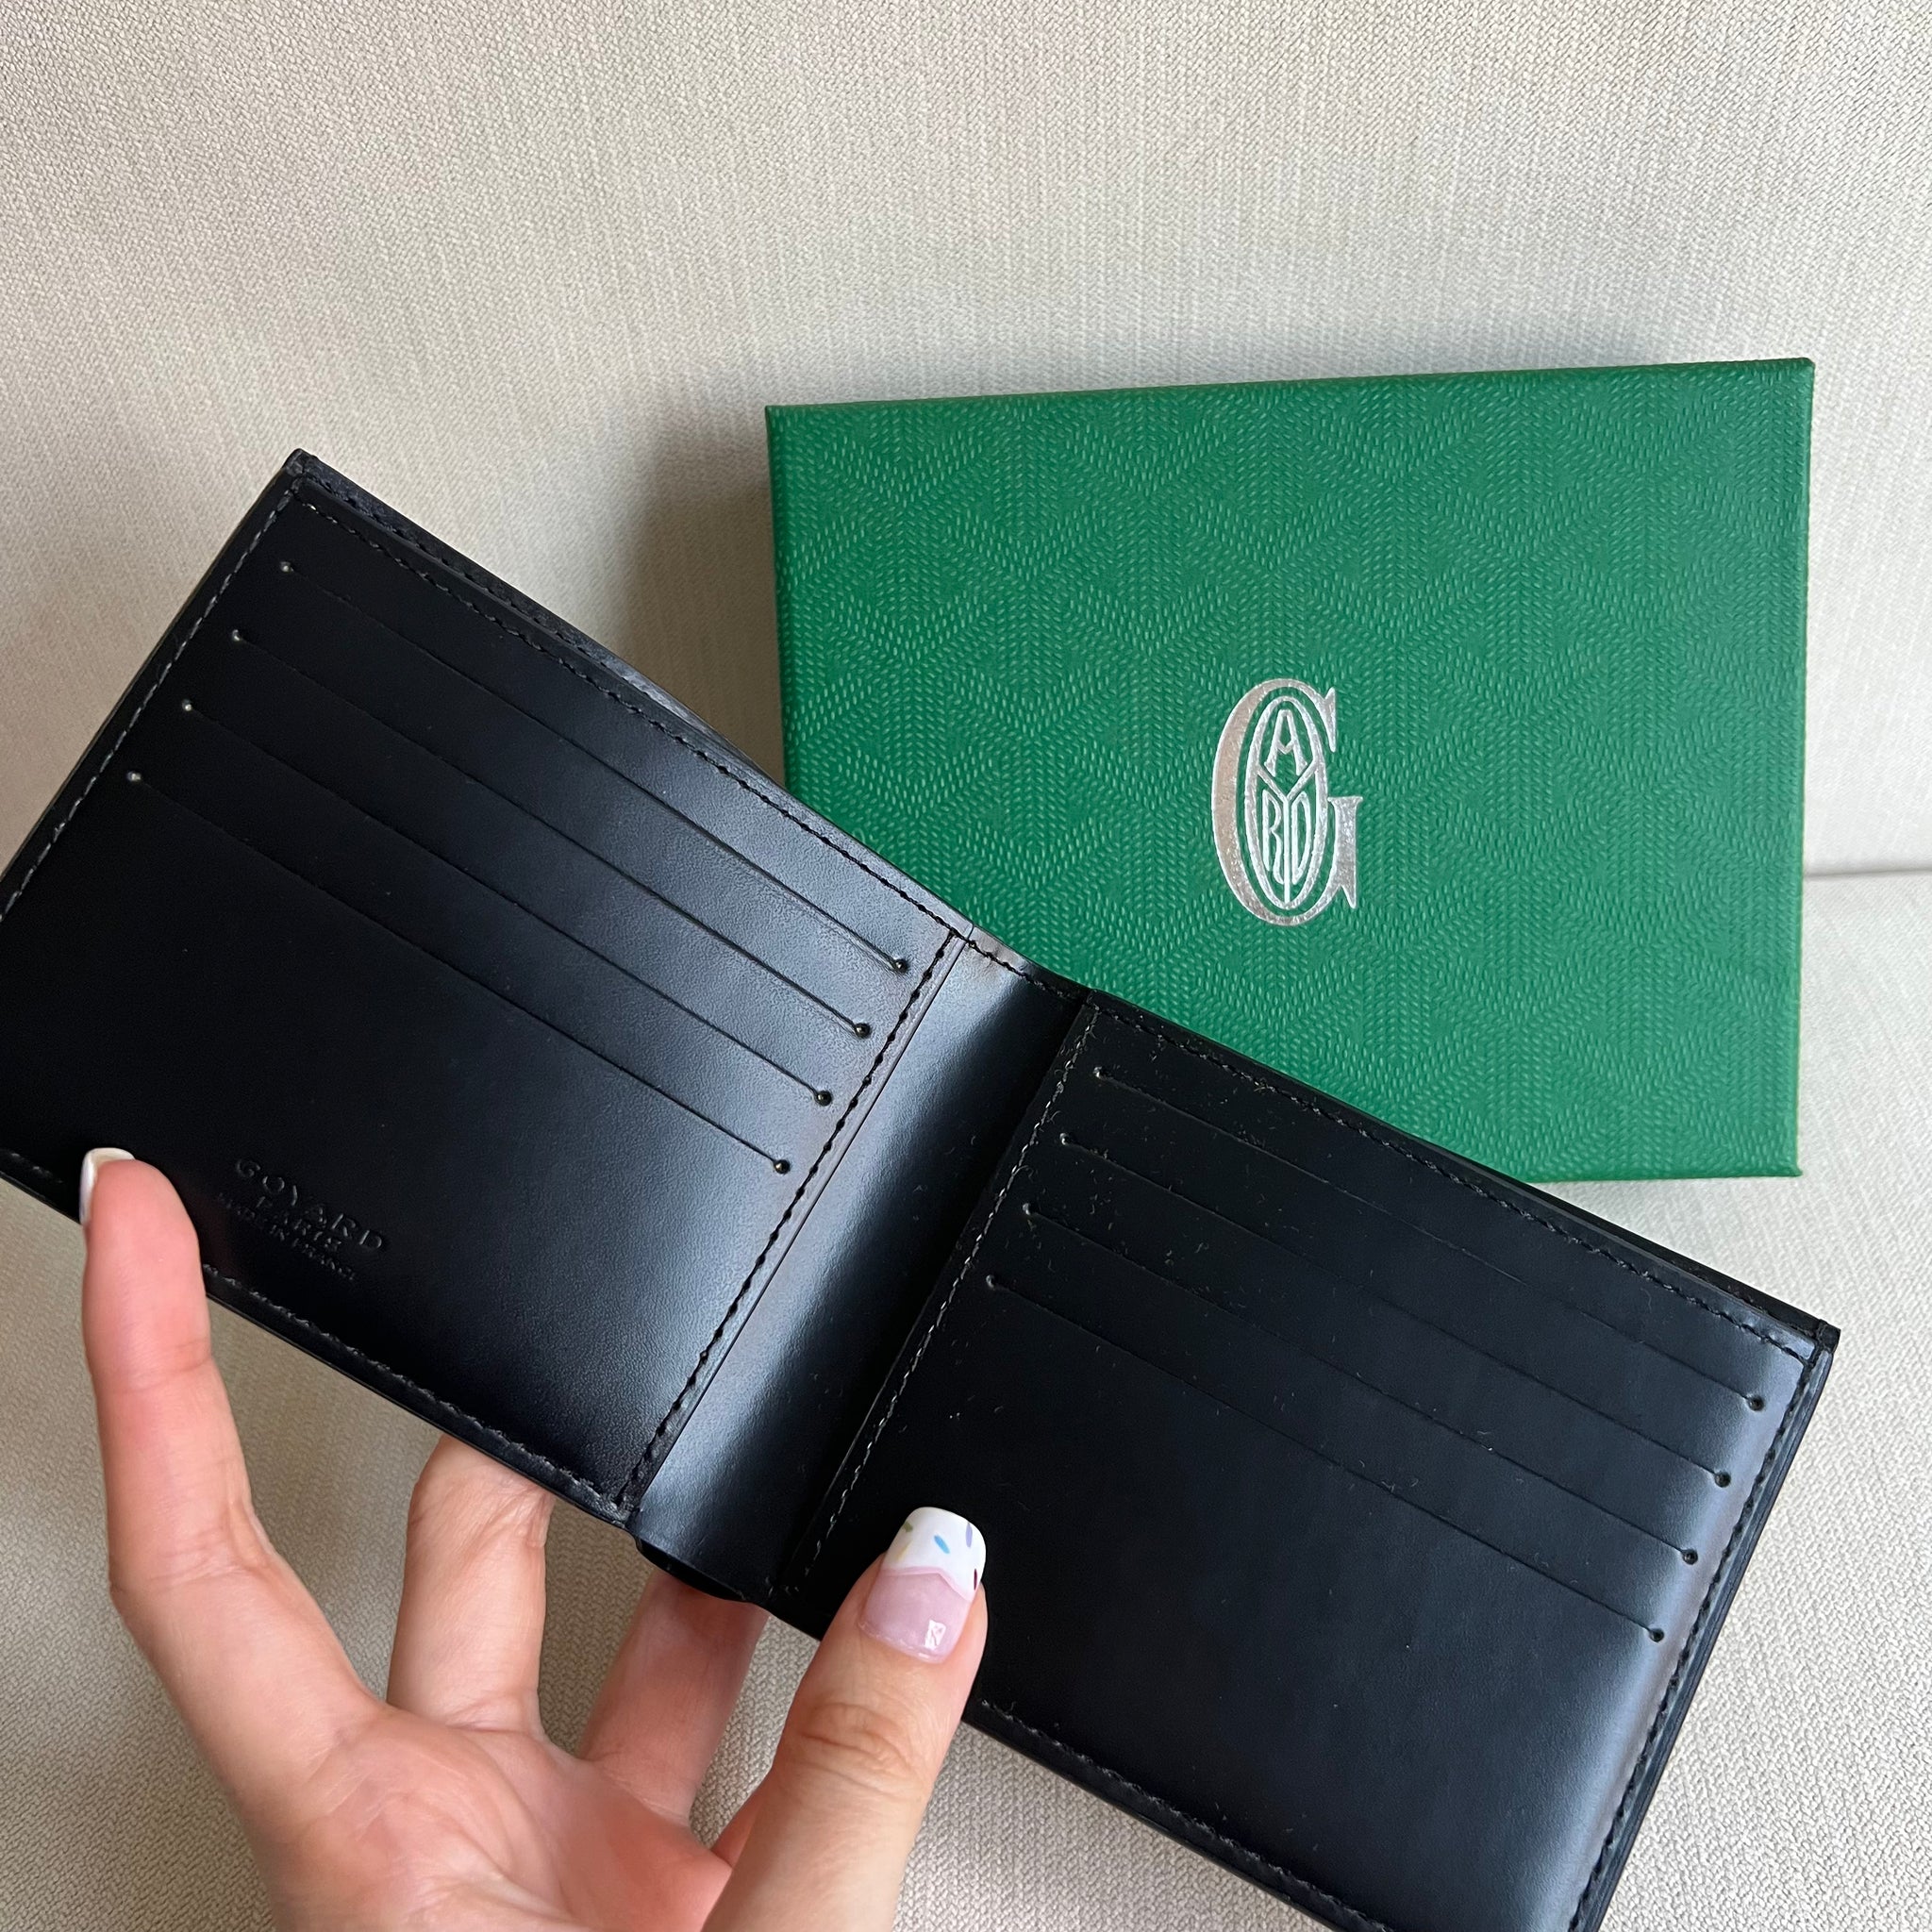 GOYARD Goyardine Bi-Fold Victoire PM Wallet Black 1246581